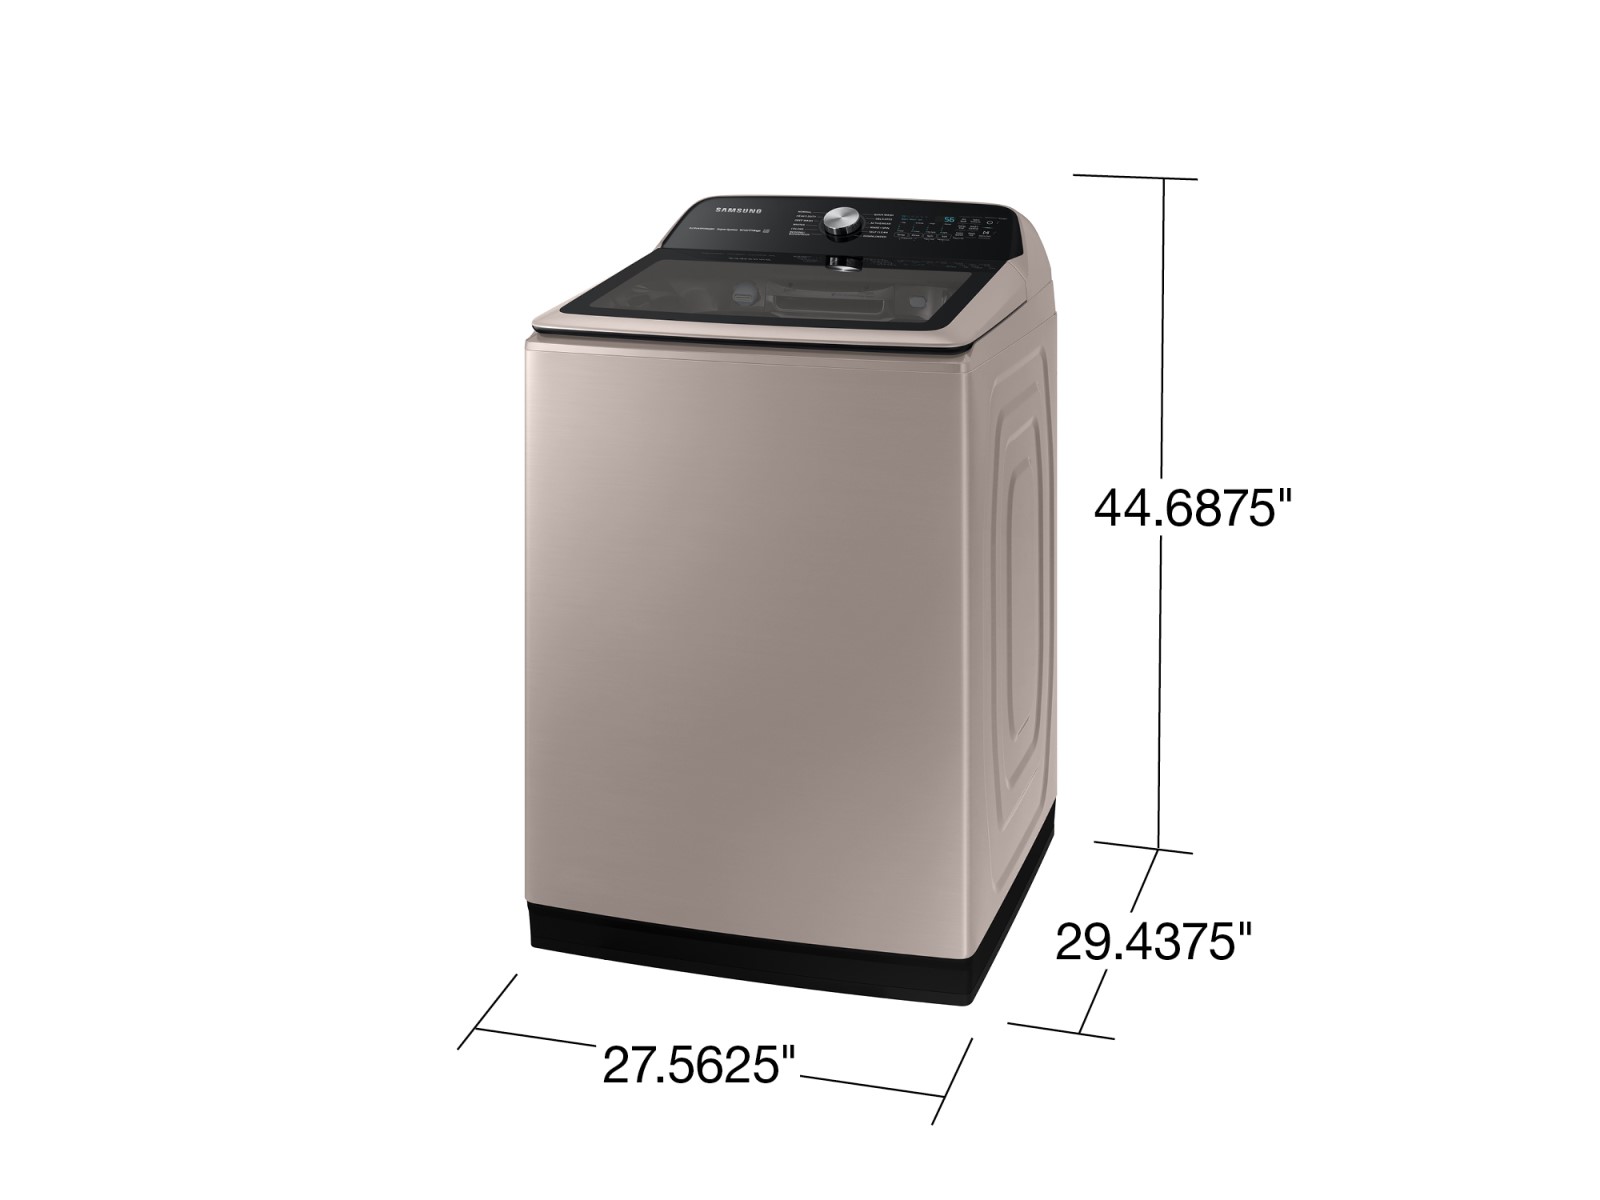 Samsung Washing Machine - 5.2 Cu. Ft. High Efficiency Top Load